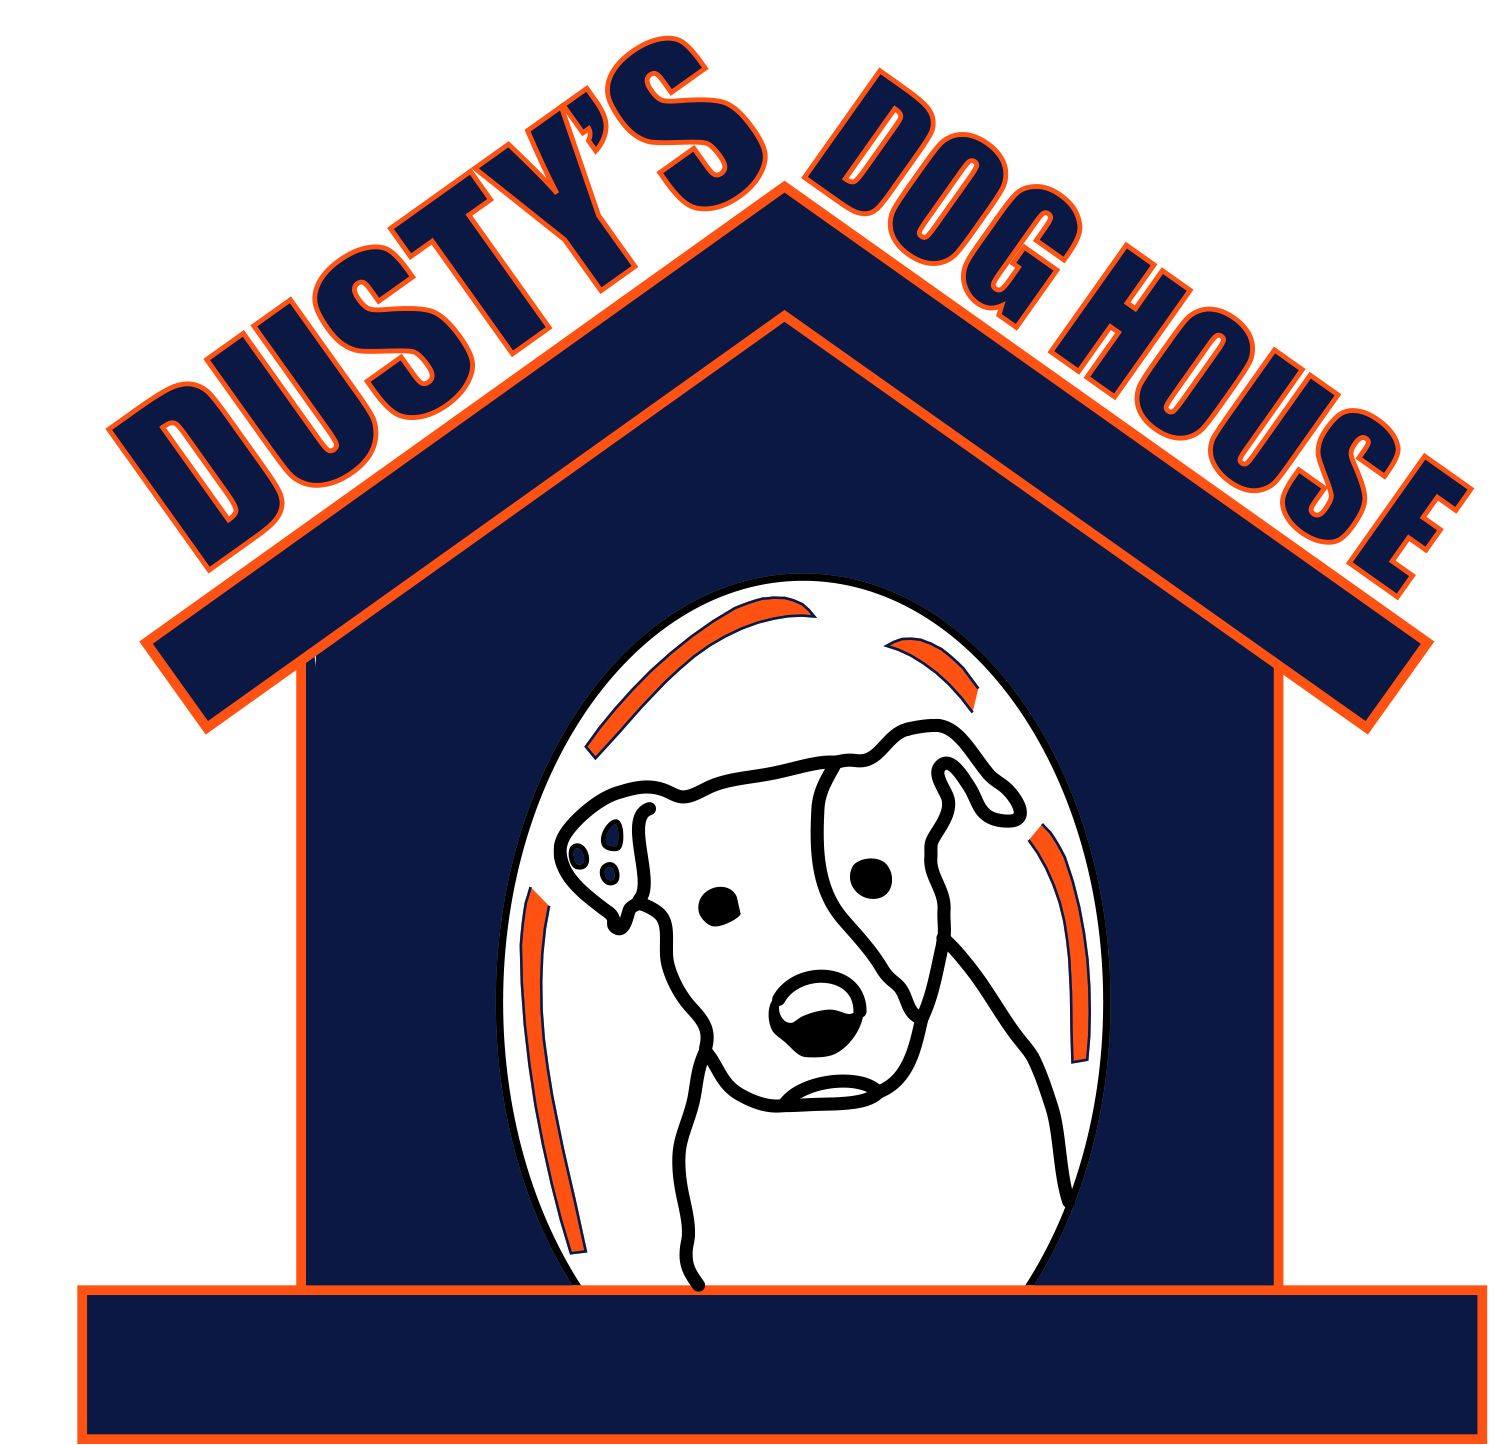 Зе дог хаус демо dog houses info. Хаус собак. Авы для хаусов с собаками. Хаус собак аватарка. Название для хаусов собак.